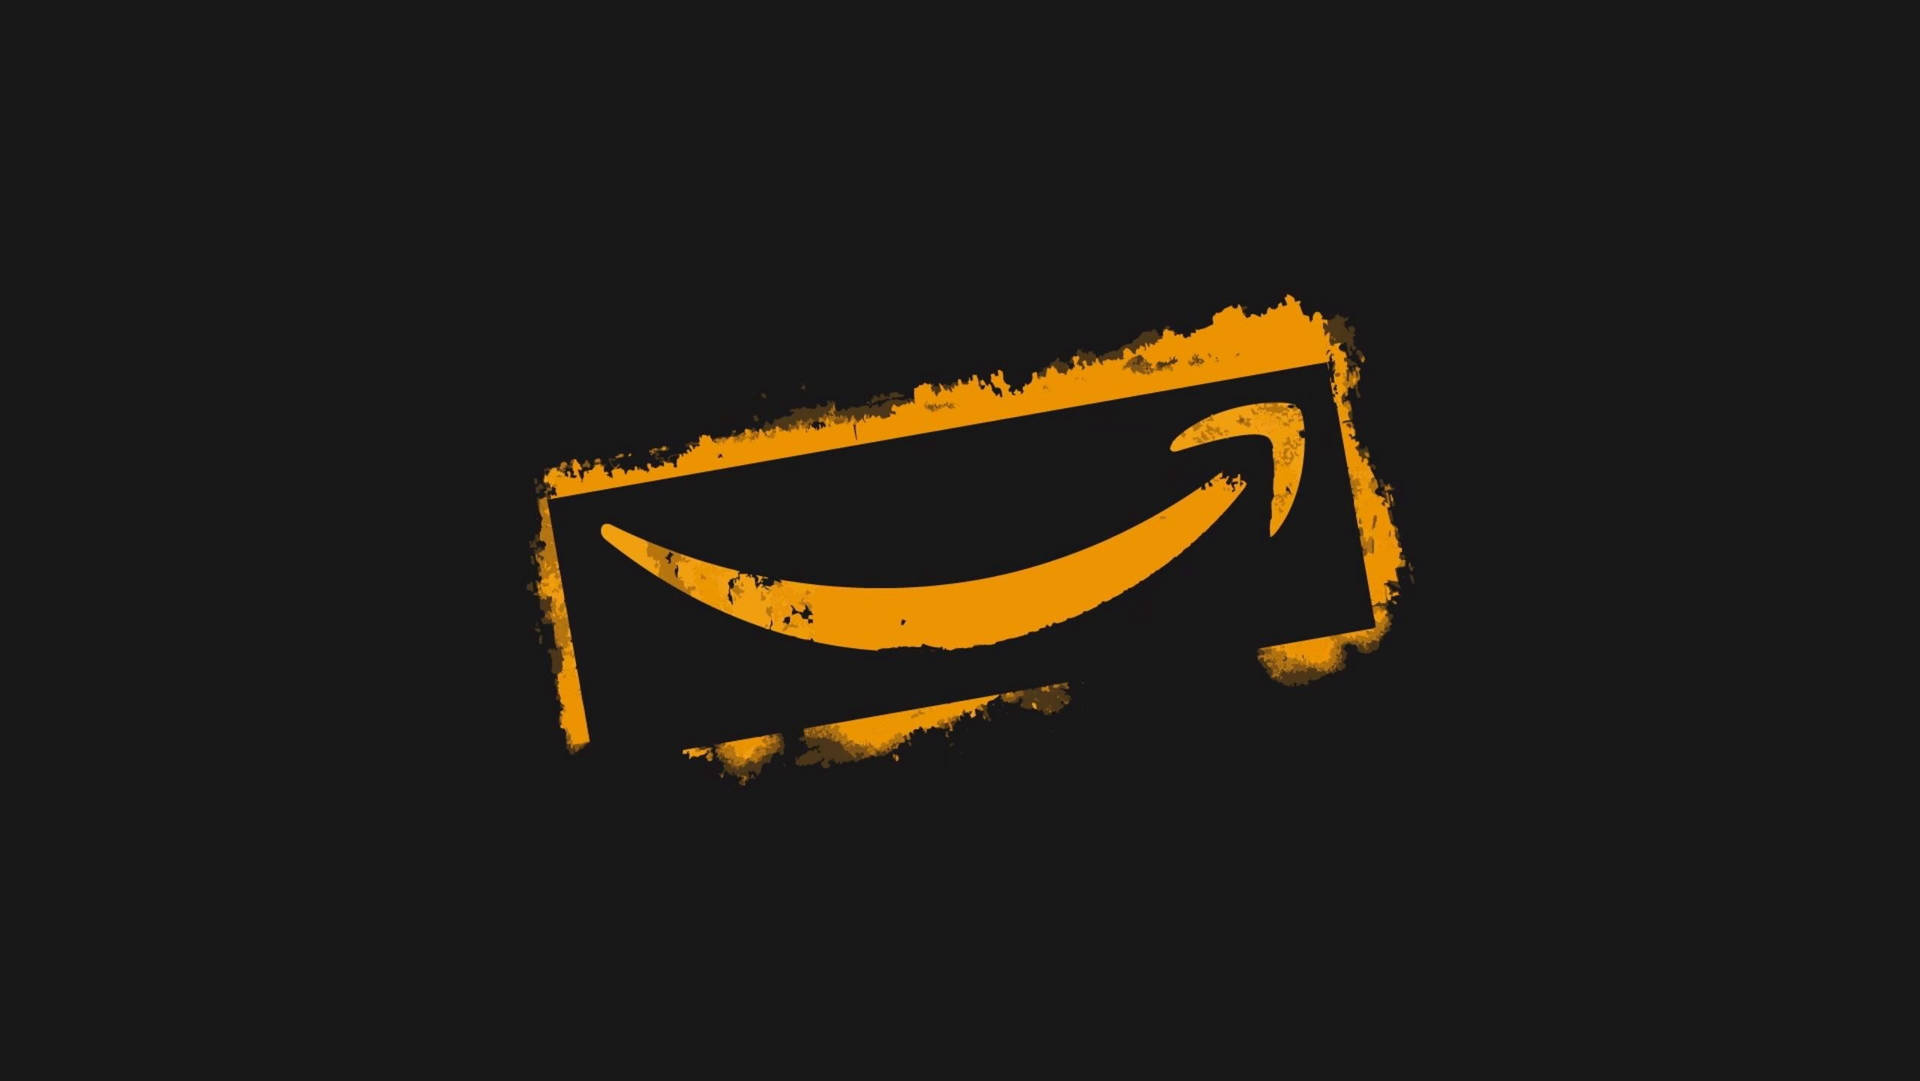 Amazonpfeil-logo Wallpaper